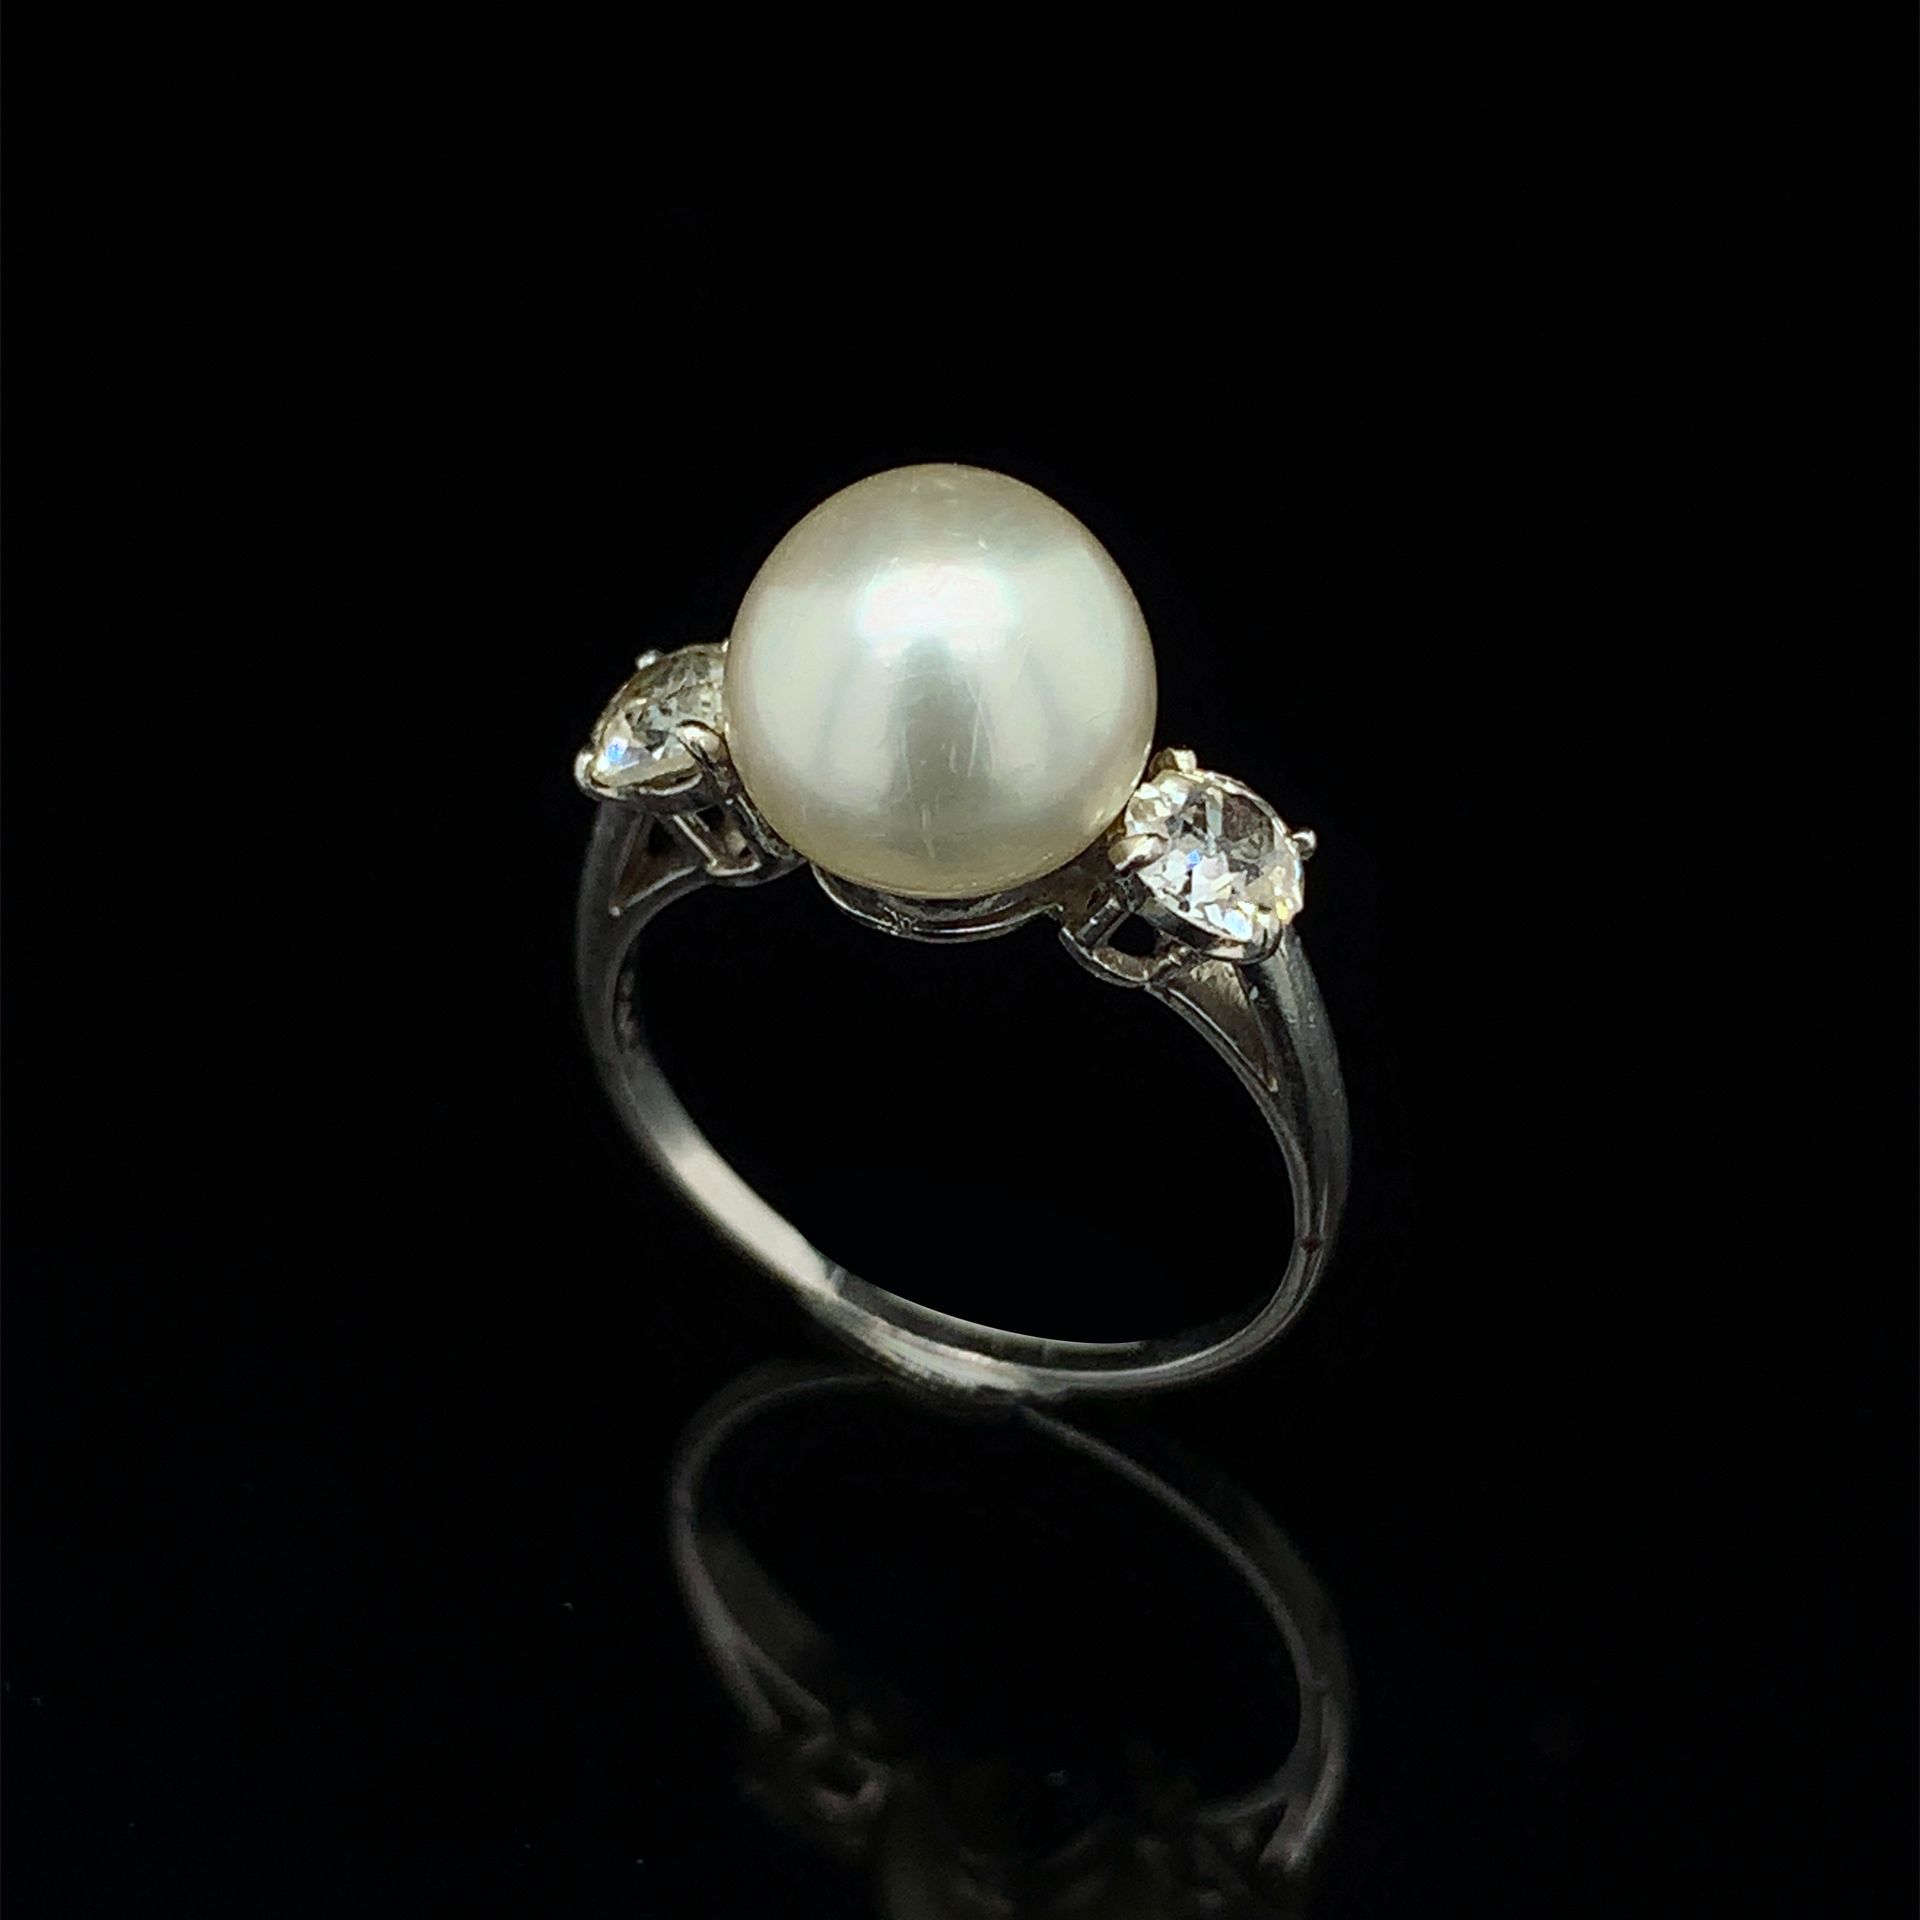 CHAUMET 铂金(950‰)和白金(750‰)戒指上镶嵌着一颗珍珠(未经测试)，白色，略带梨形和纽扣，肩部有两颗老式切割钻石。
法国作品，20世纪初。
，签&hellip;